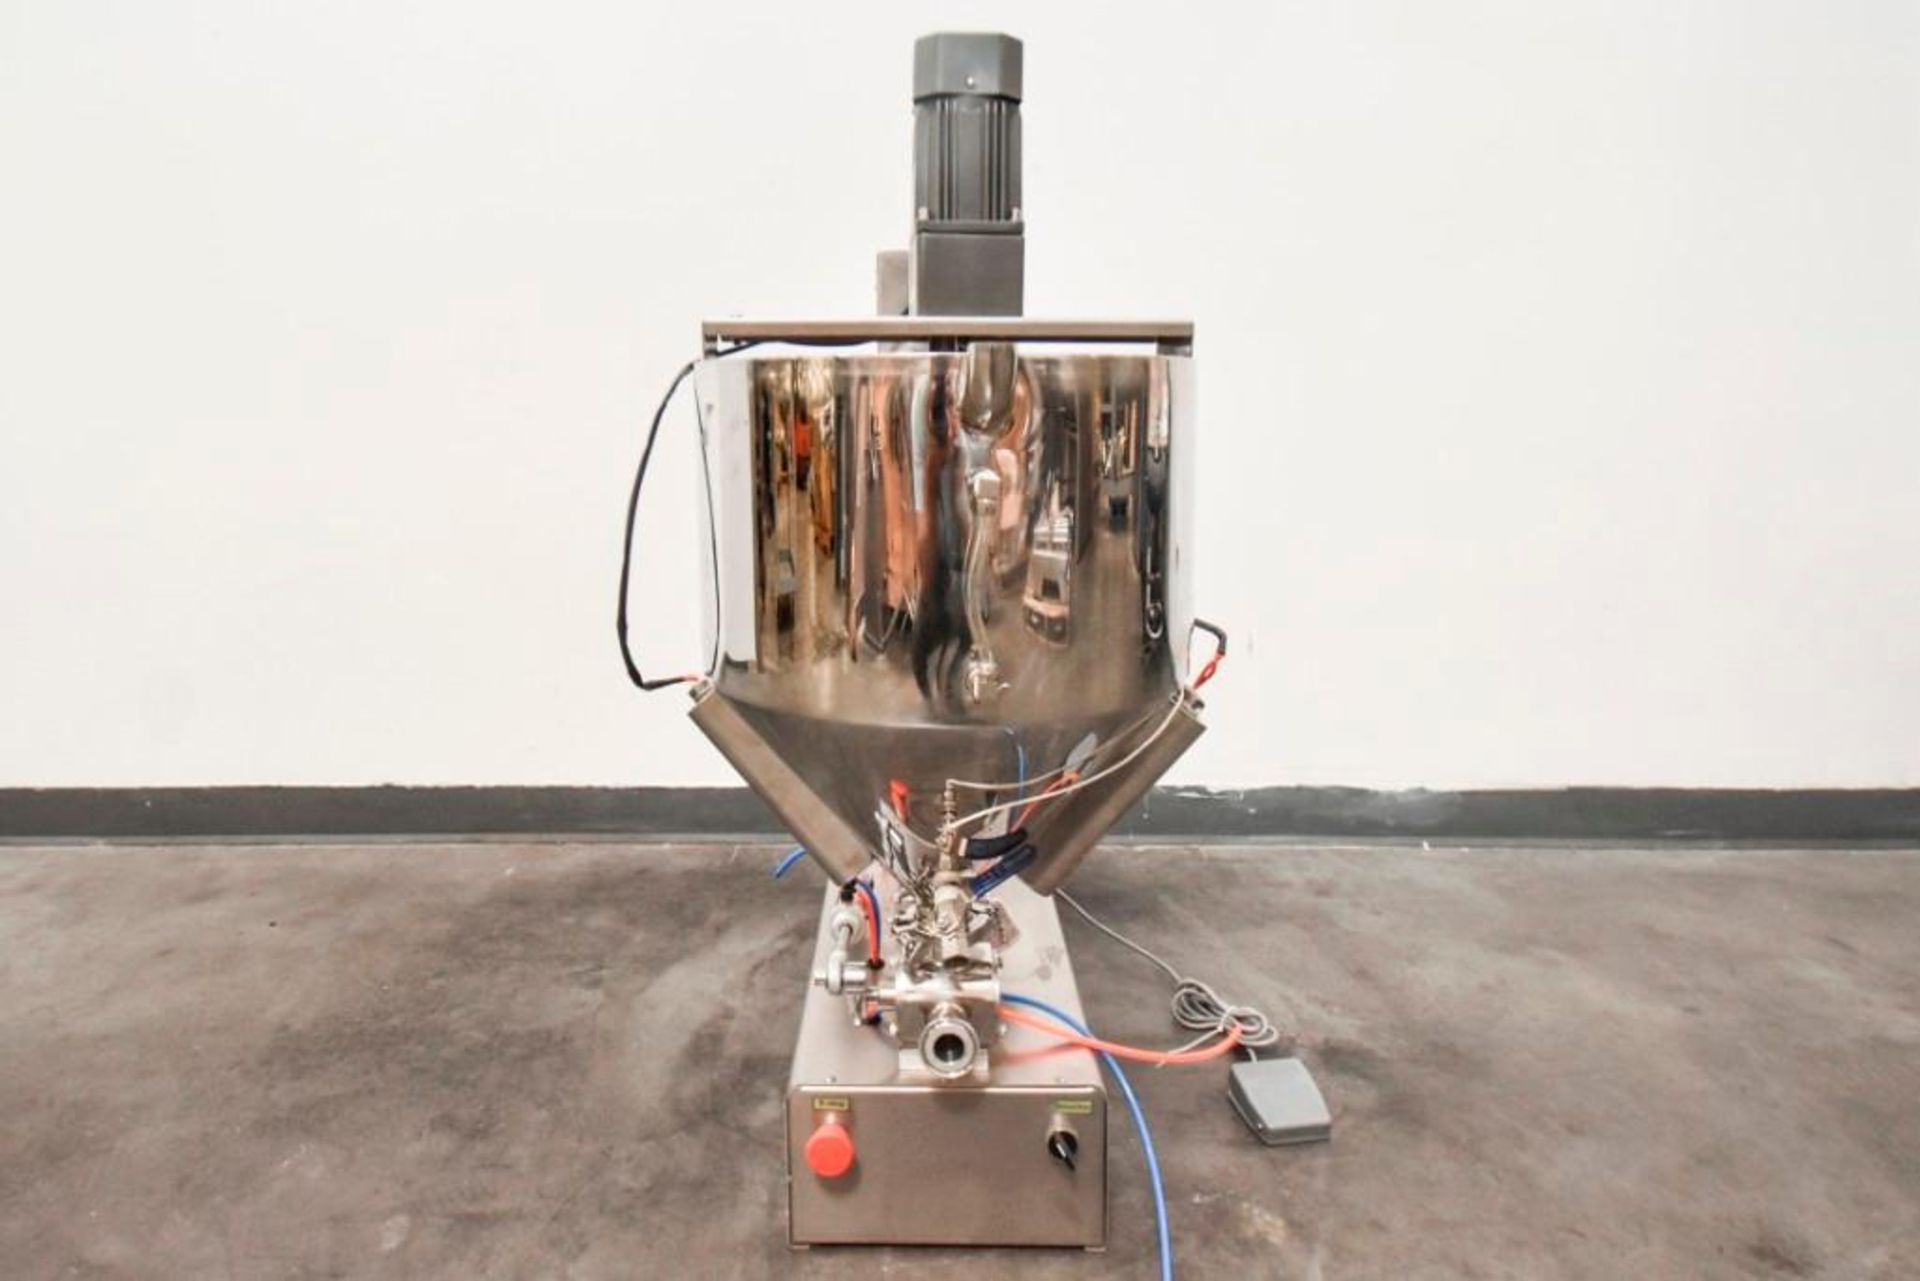 Quantitative Semi-Automatic Paste Liquid Filling Machine G1WG with Heated Hopper & Mixing Motor - Image 4 of 15